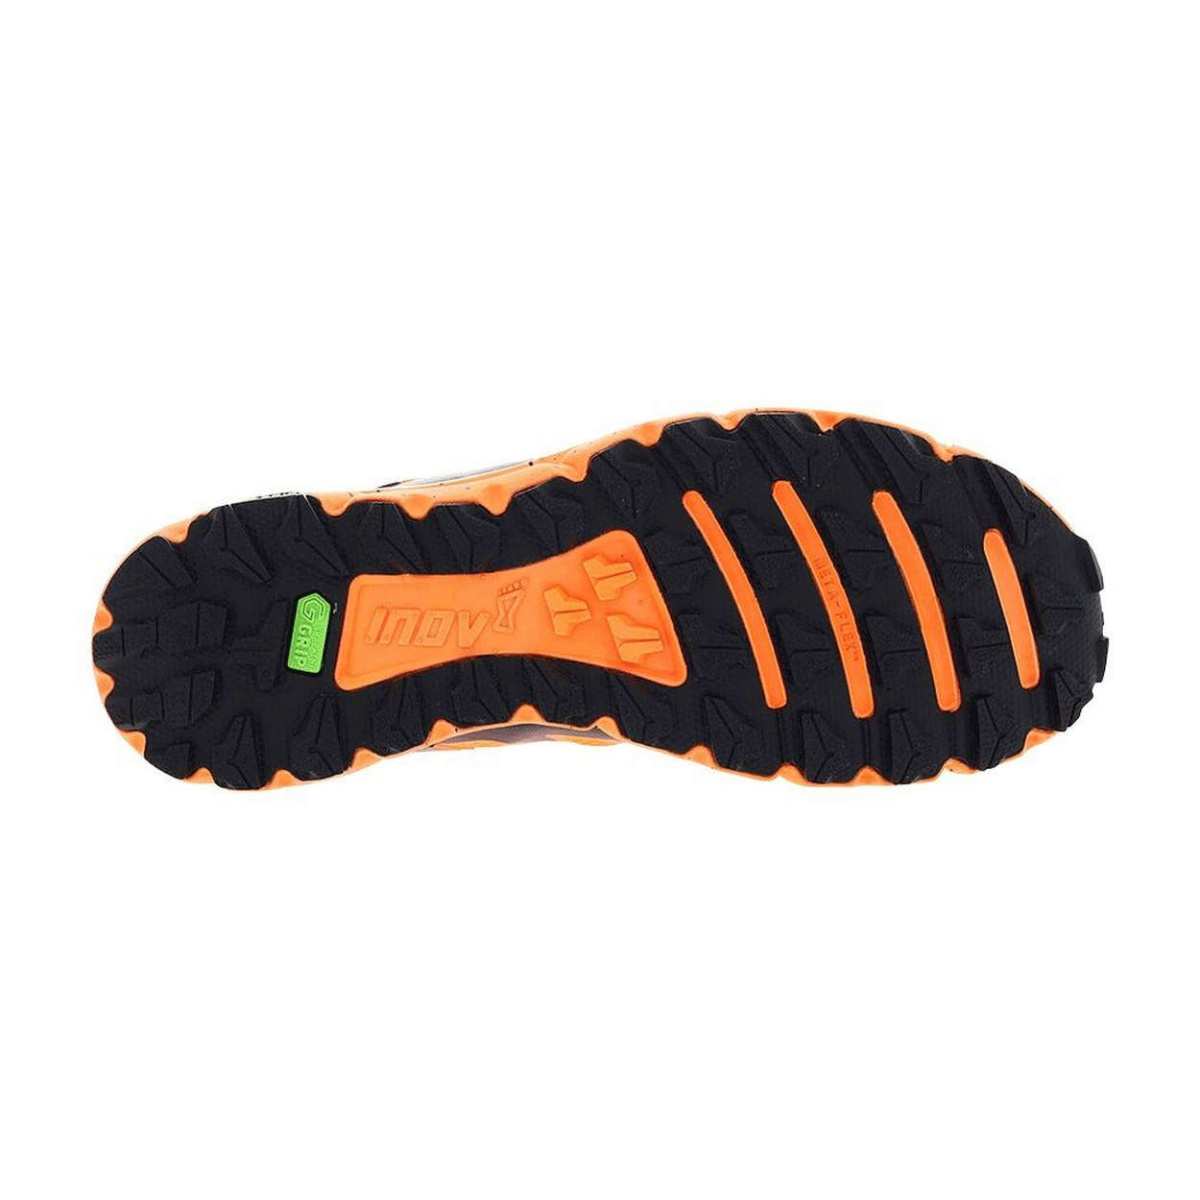 inov 8 Terra Ultra G 270 Orange zero drop trail running shoe Fast and Light CH 002